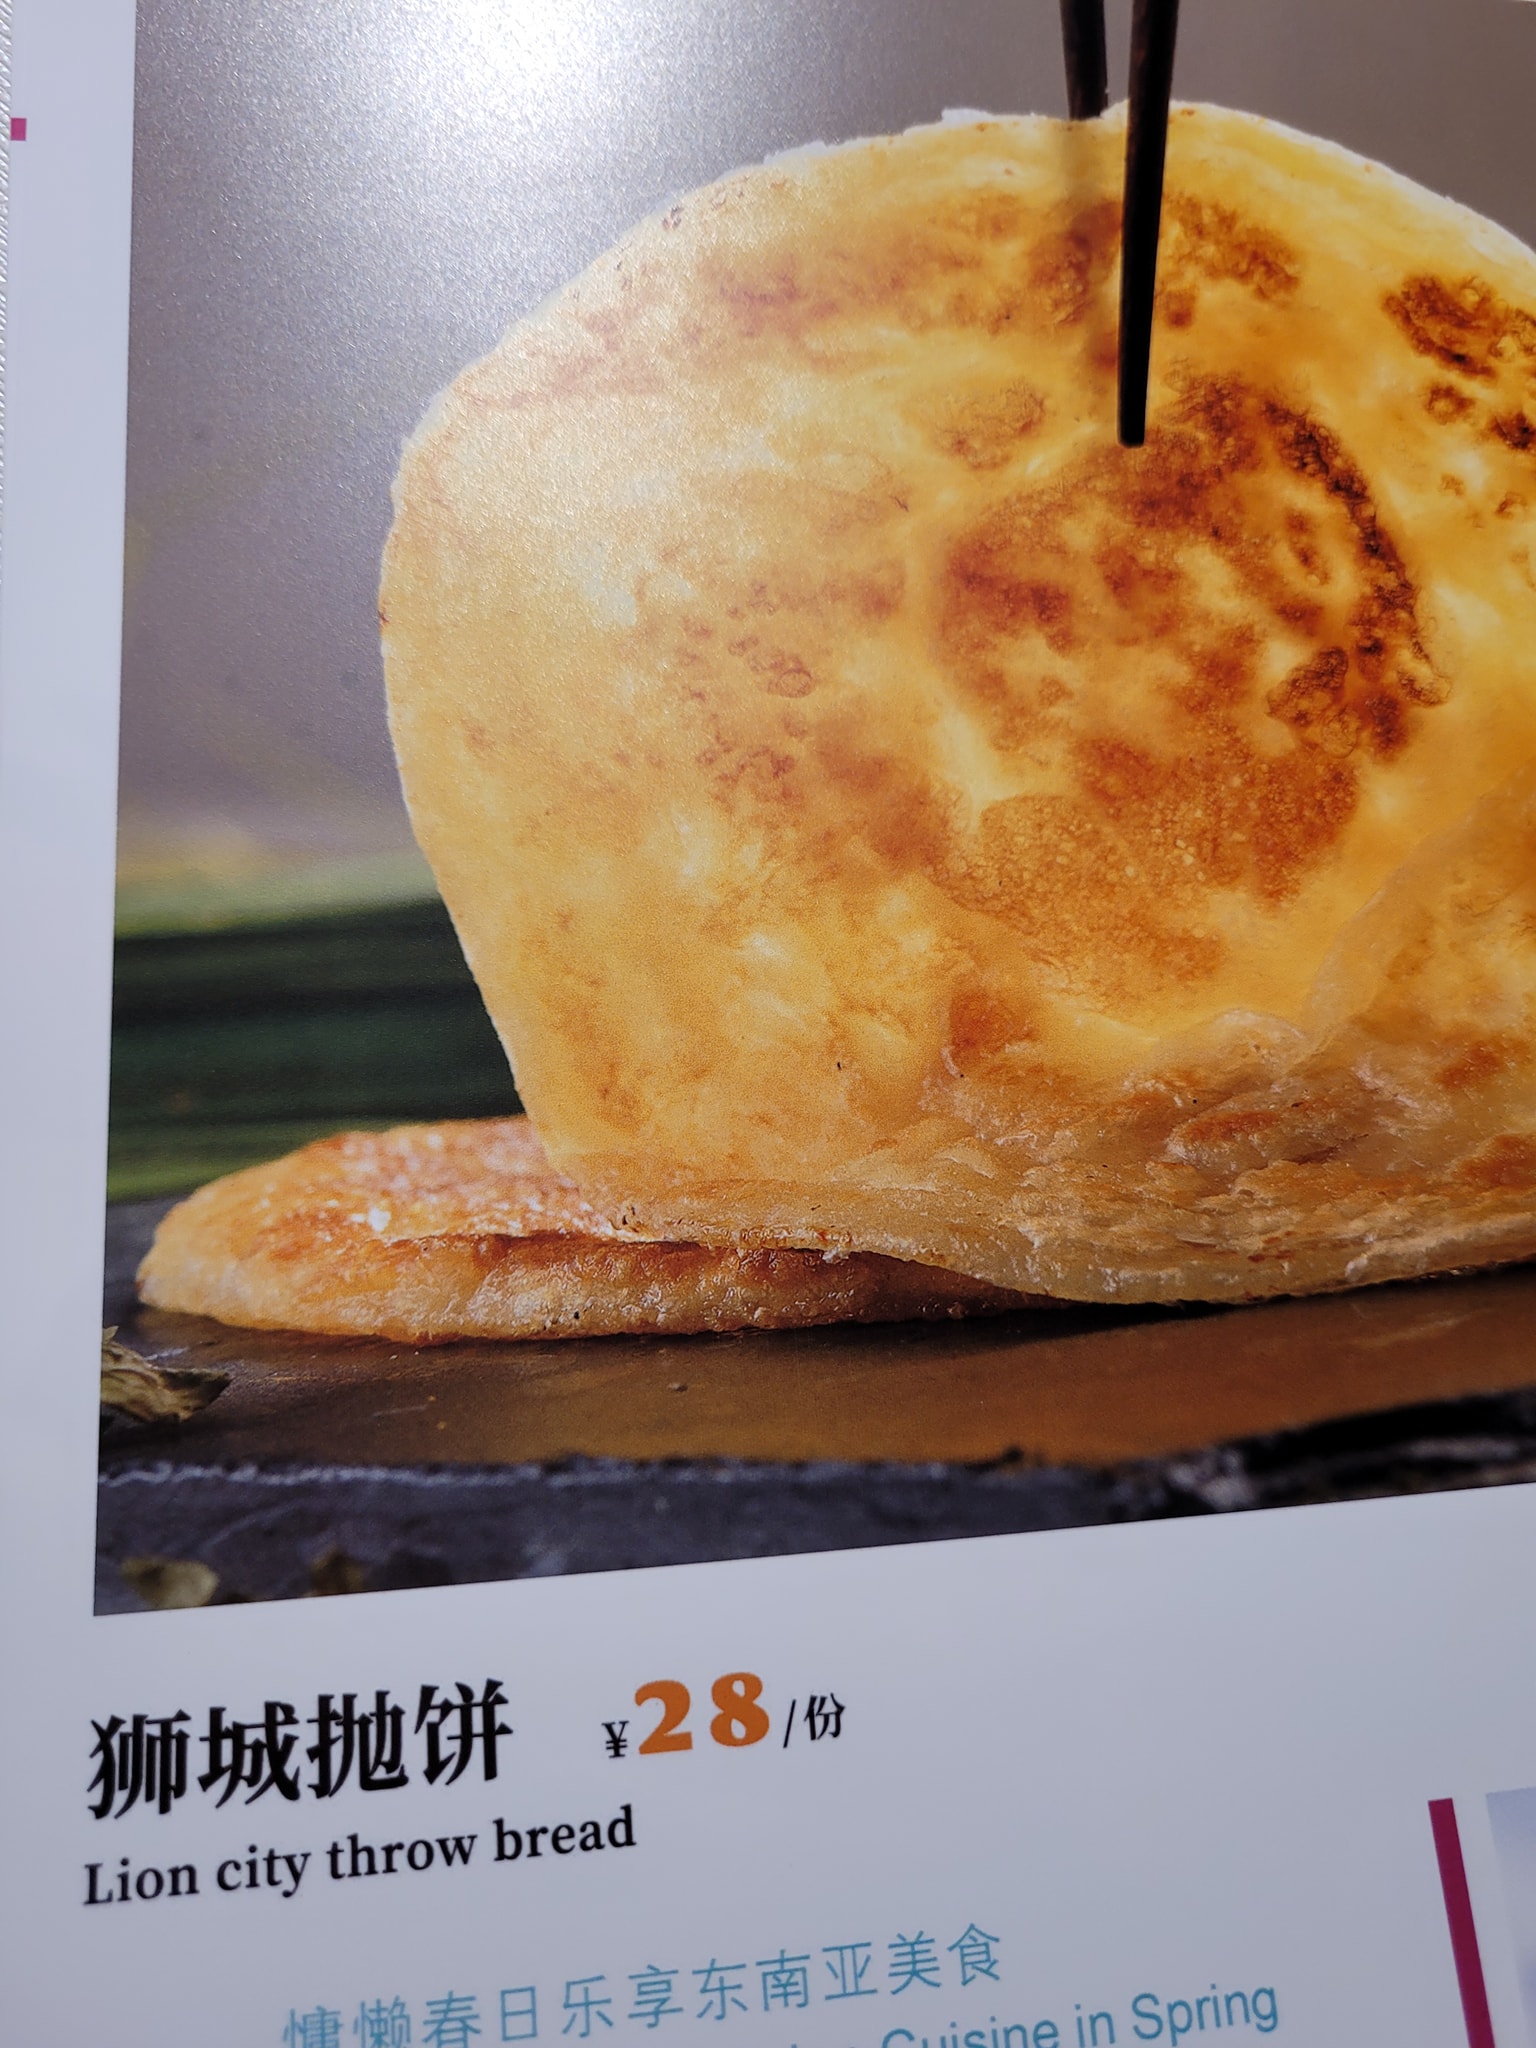 “Lion City throw bread”  中餐廳英文菜單笑翻網    